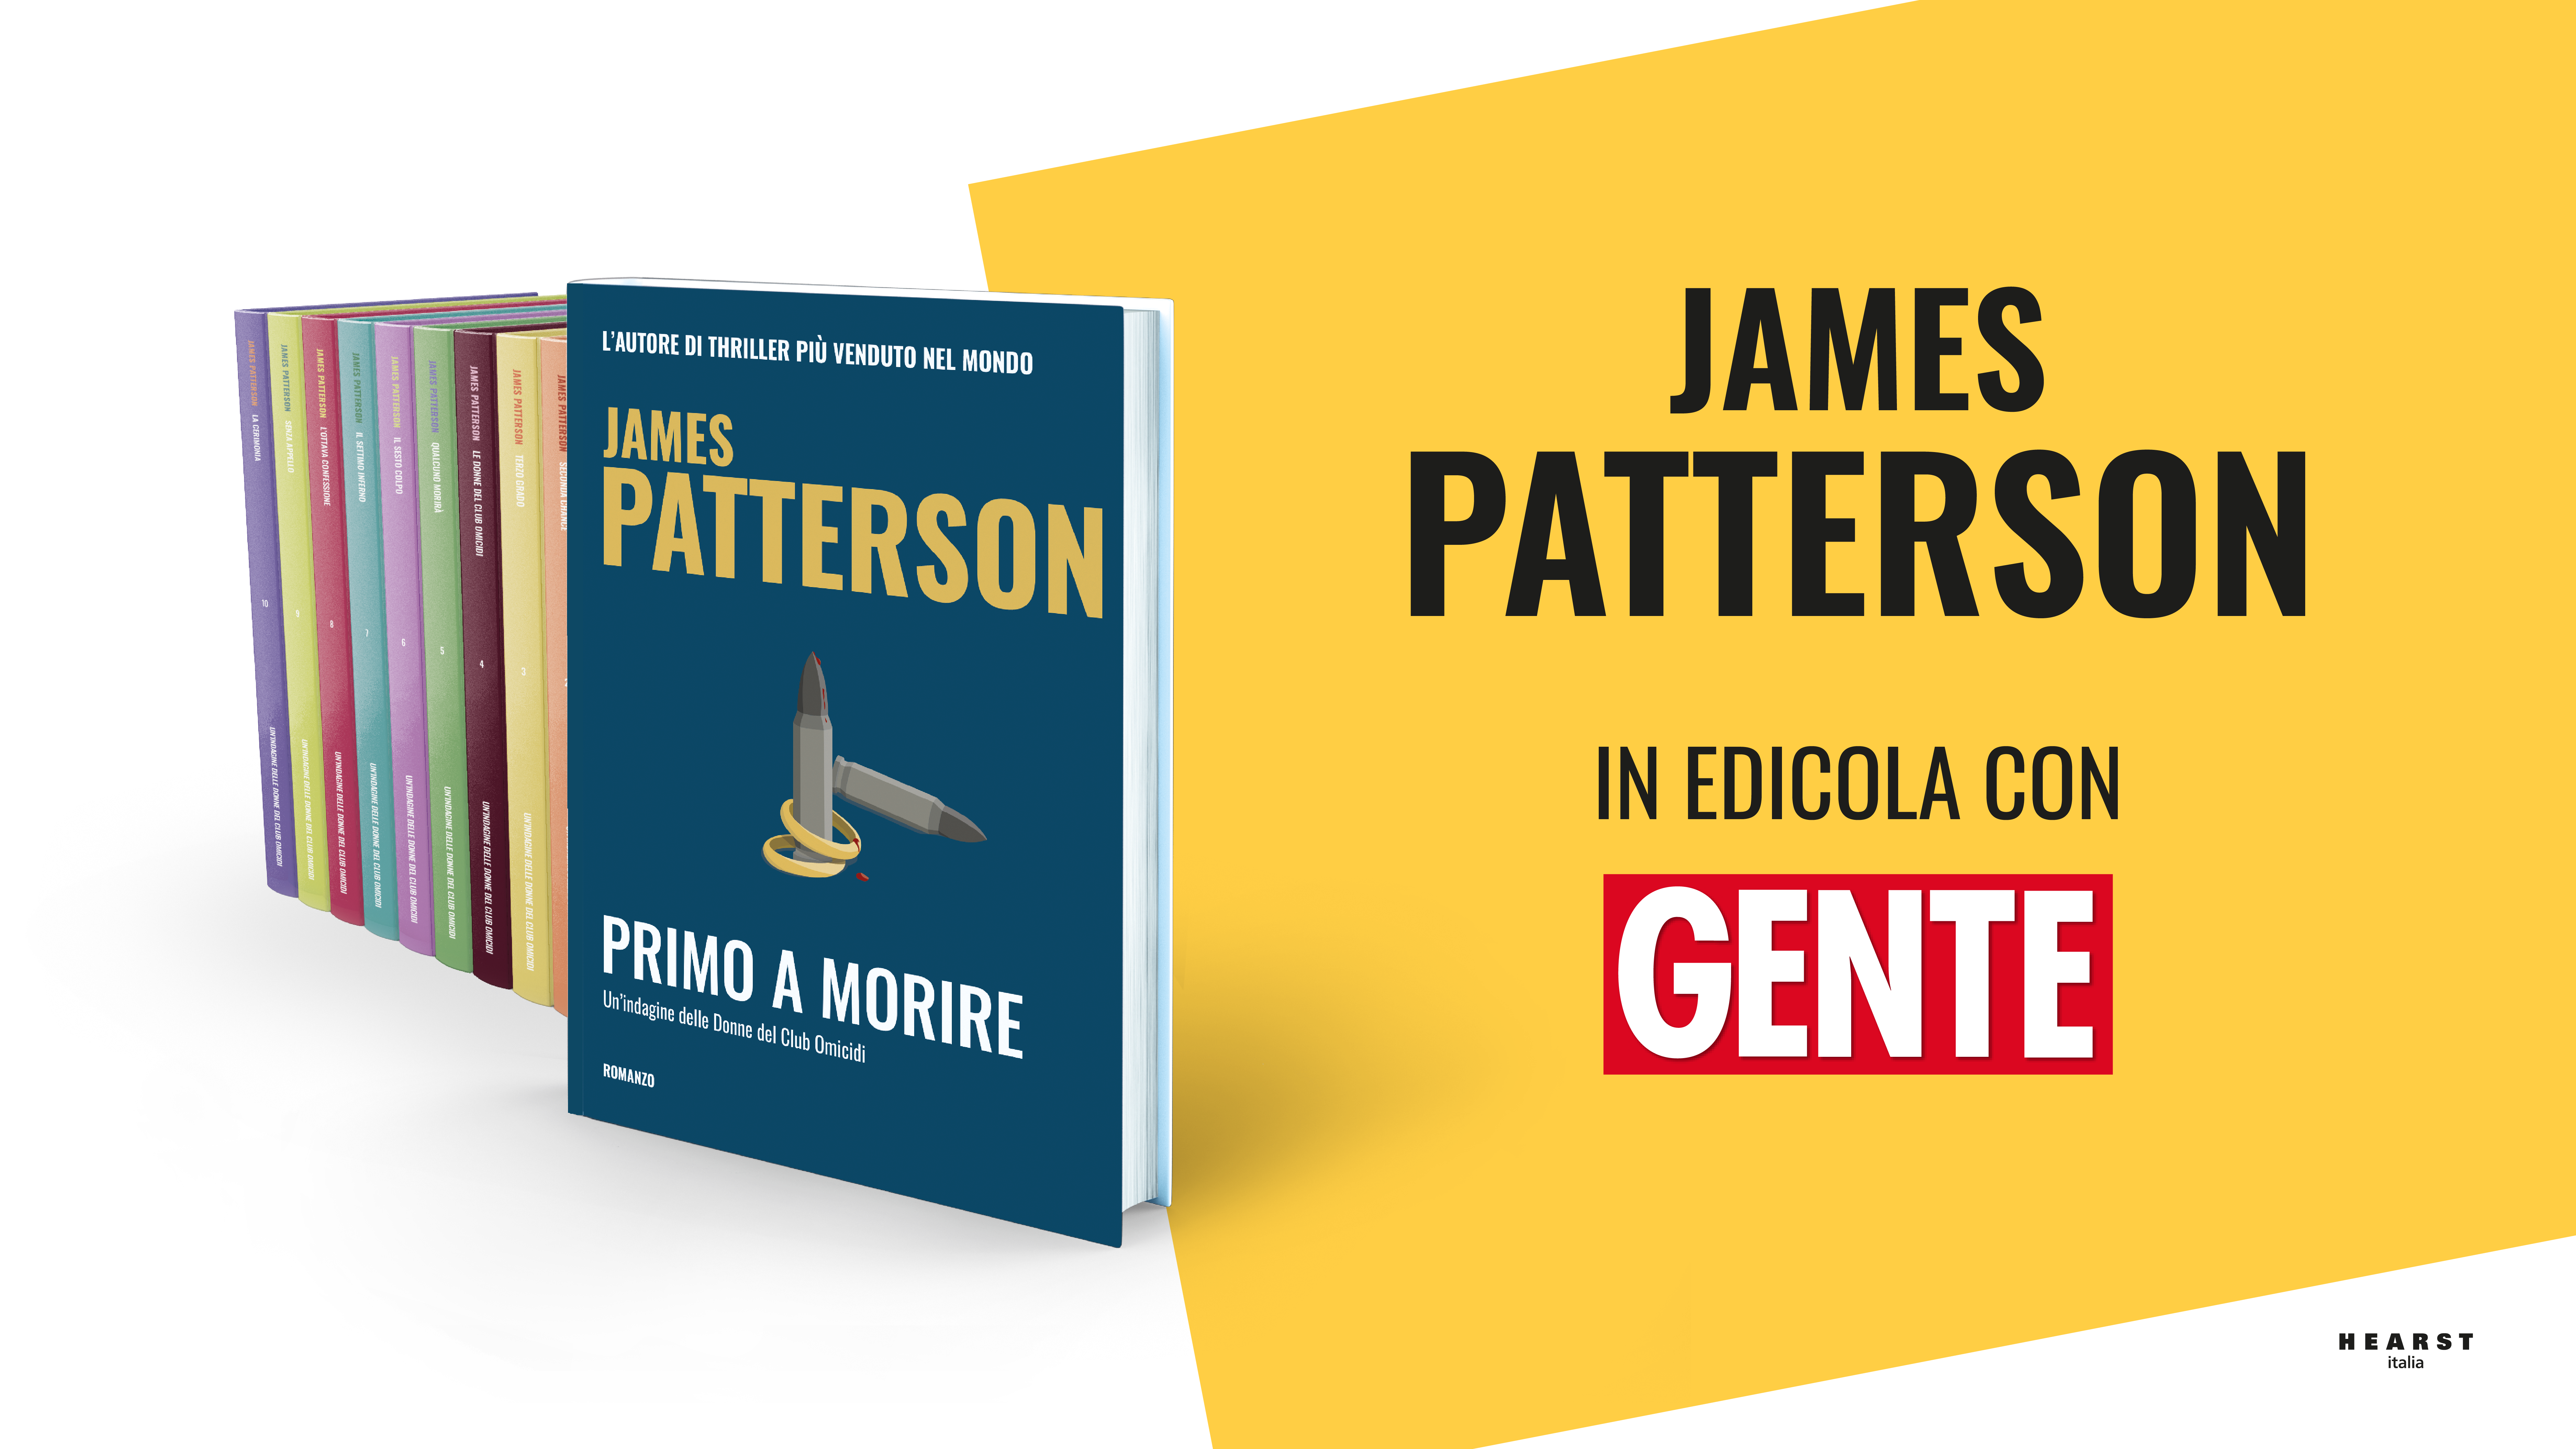 James Patterson: i libri in edicola con Gente